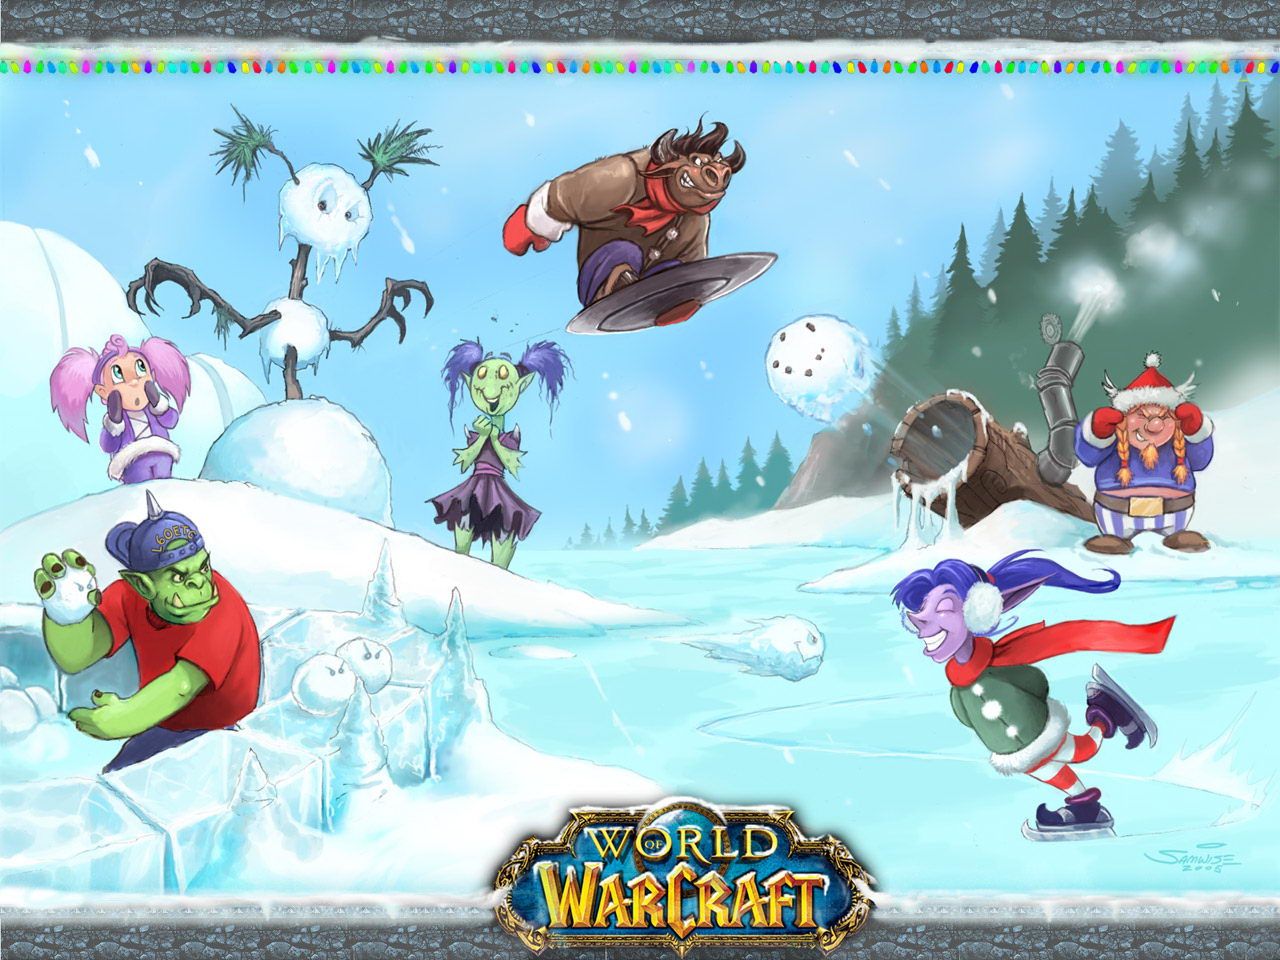 World of Warcraft Christmas Desktop Wallpaper if you like that